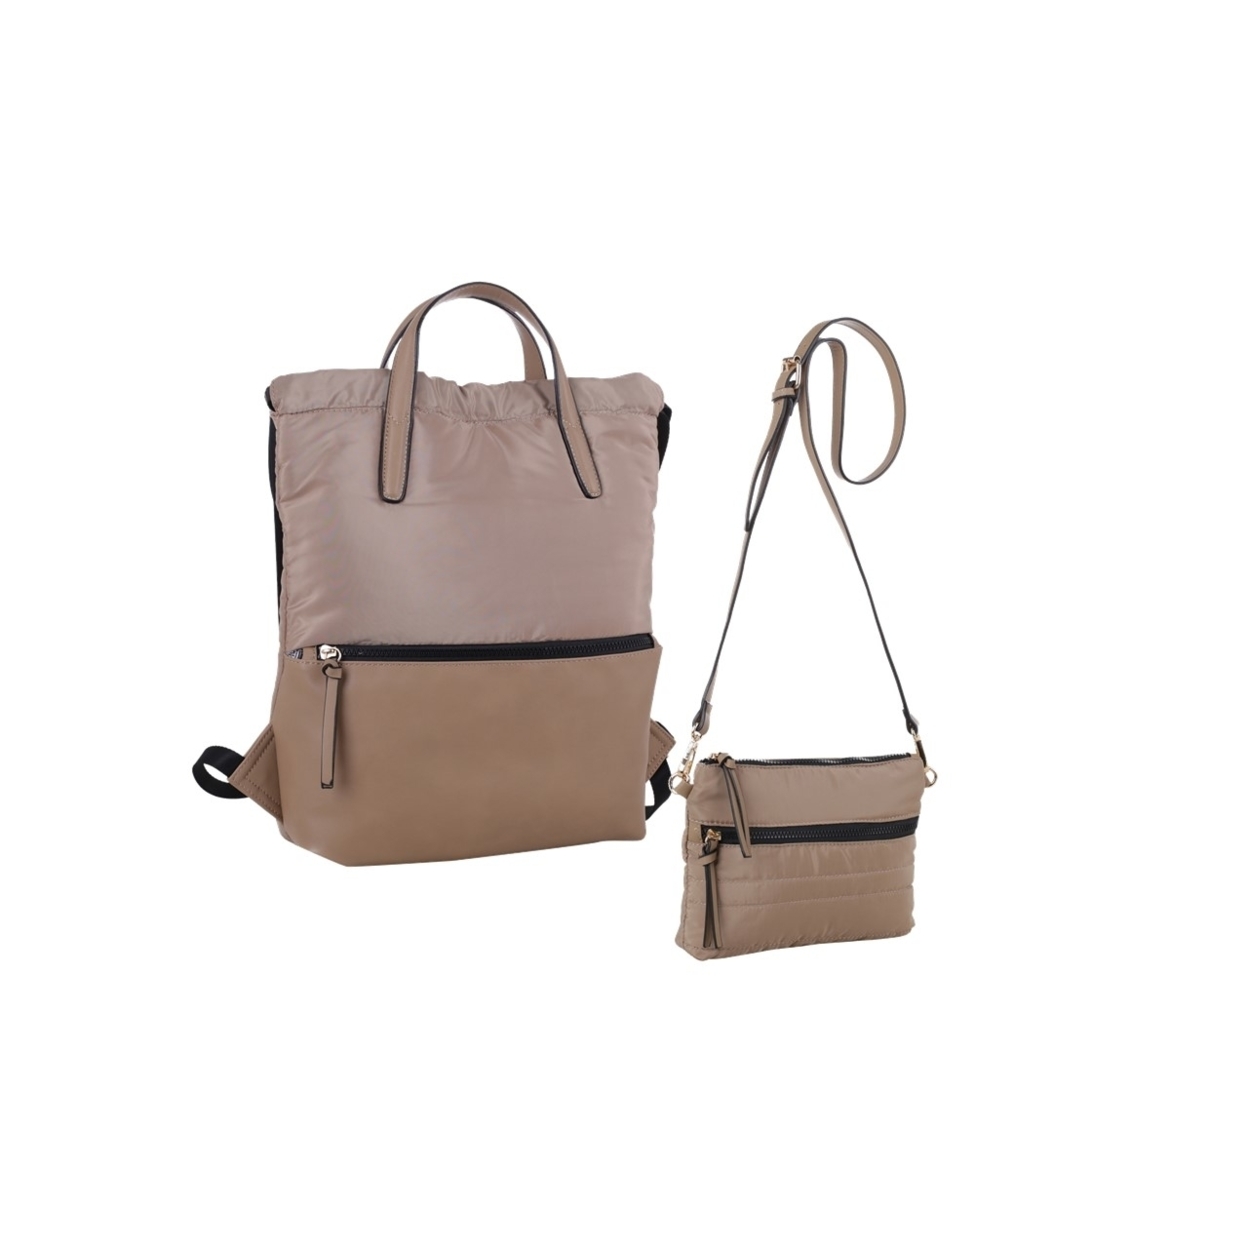 MKF Collection By Mia K. Buy Large Handbag, Get Crossbody Free - Taupe